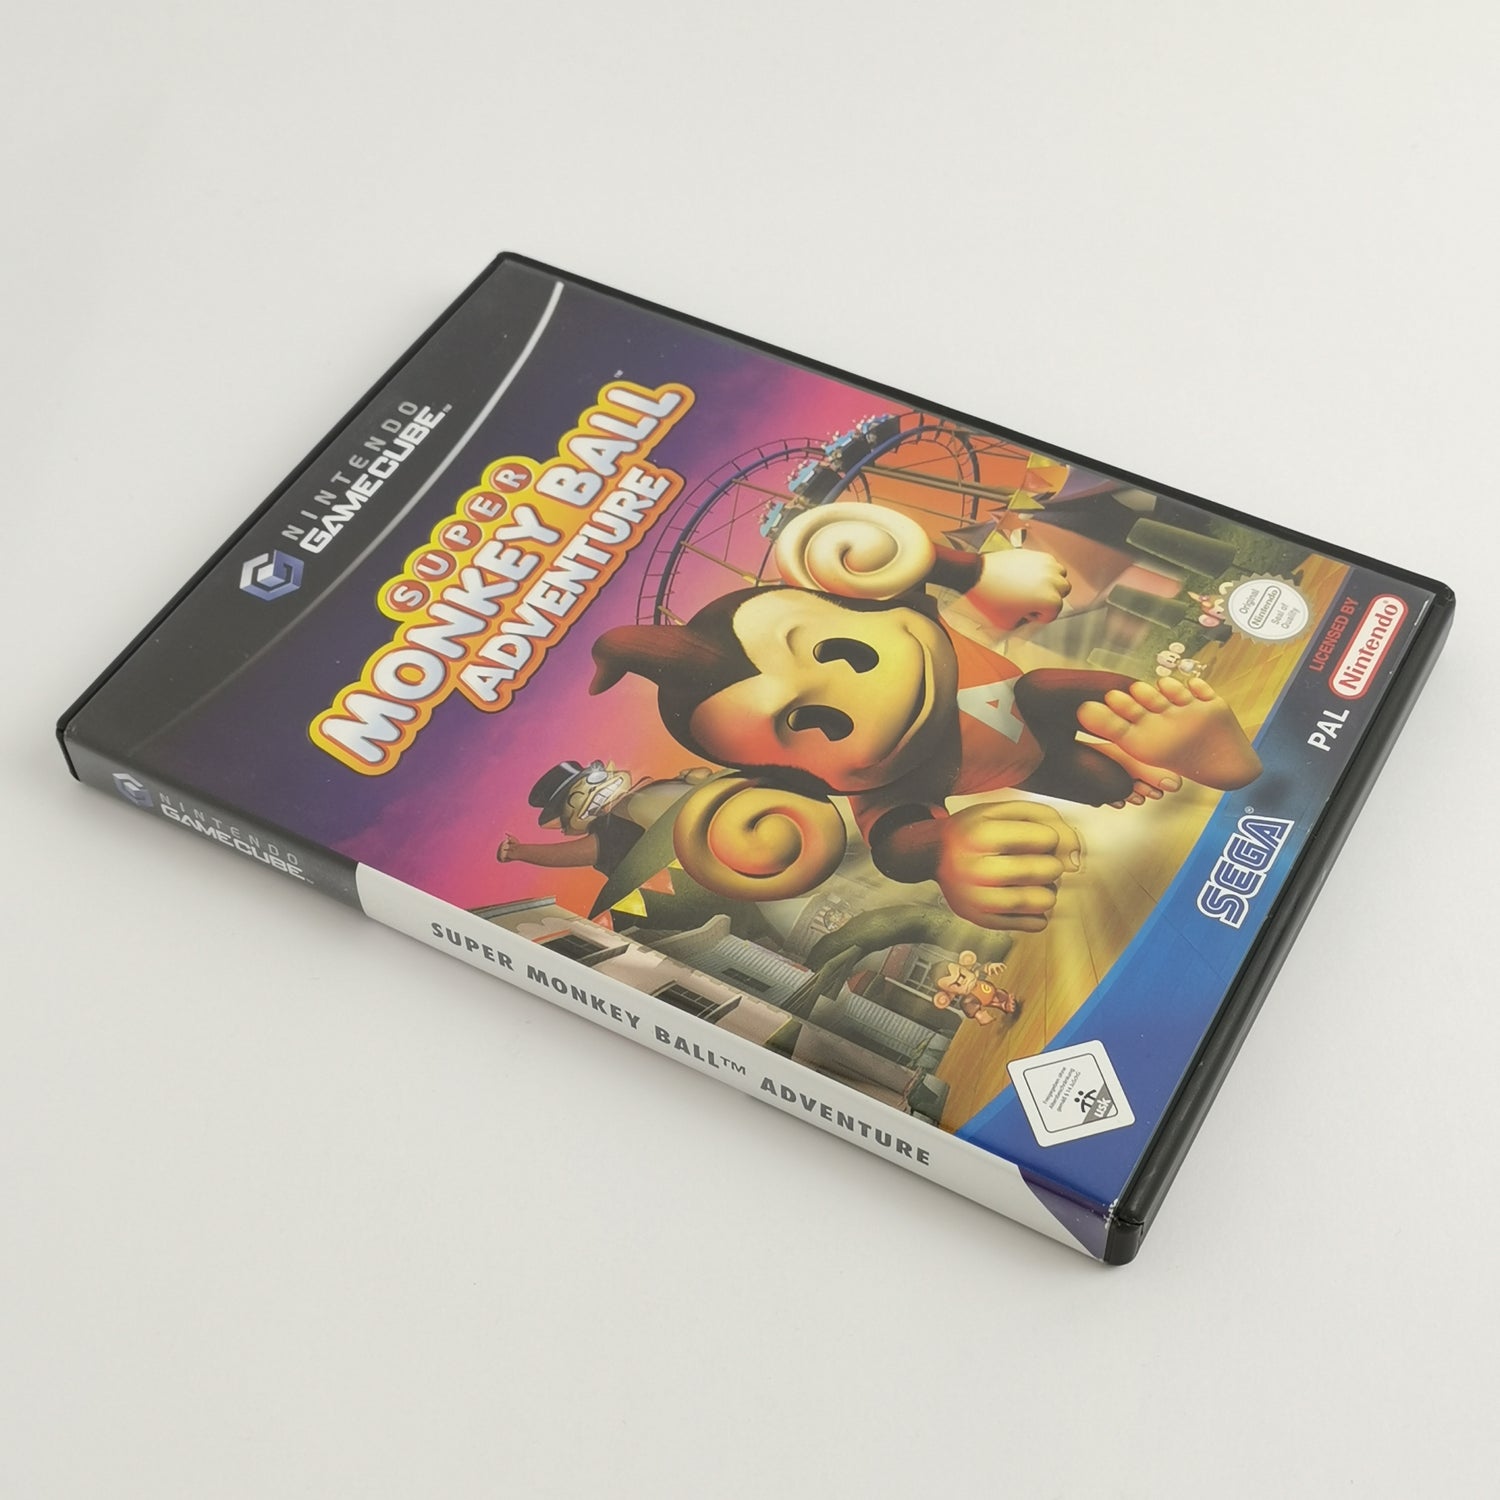 Nintendo Gamecube Game : Super Monkey Ball Adventure - Sega | German PAL - original packaging